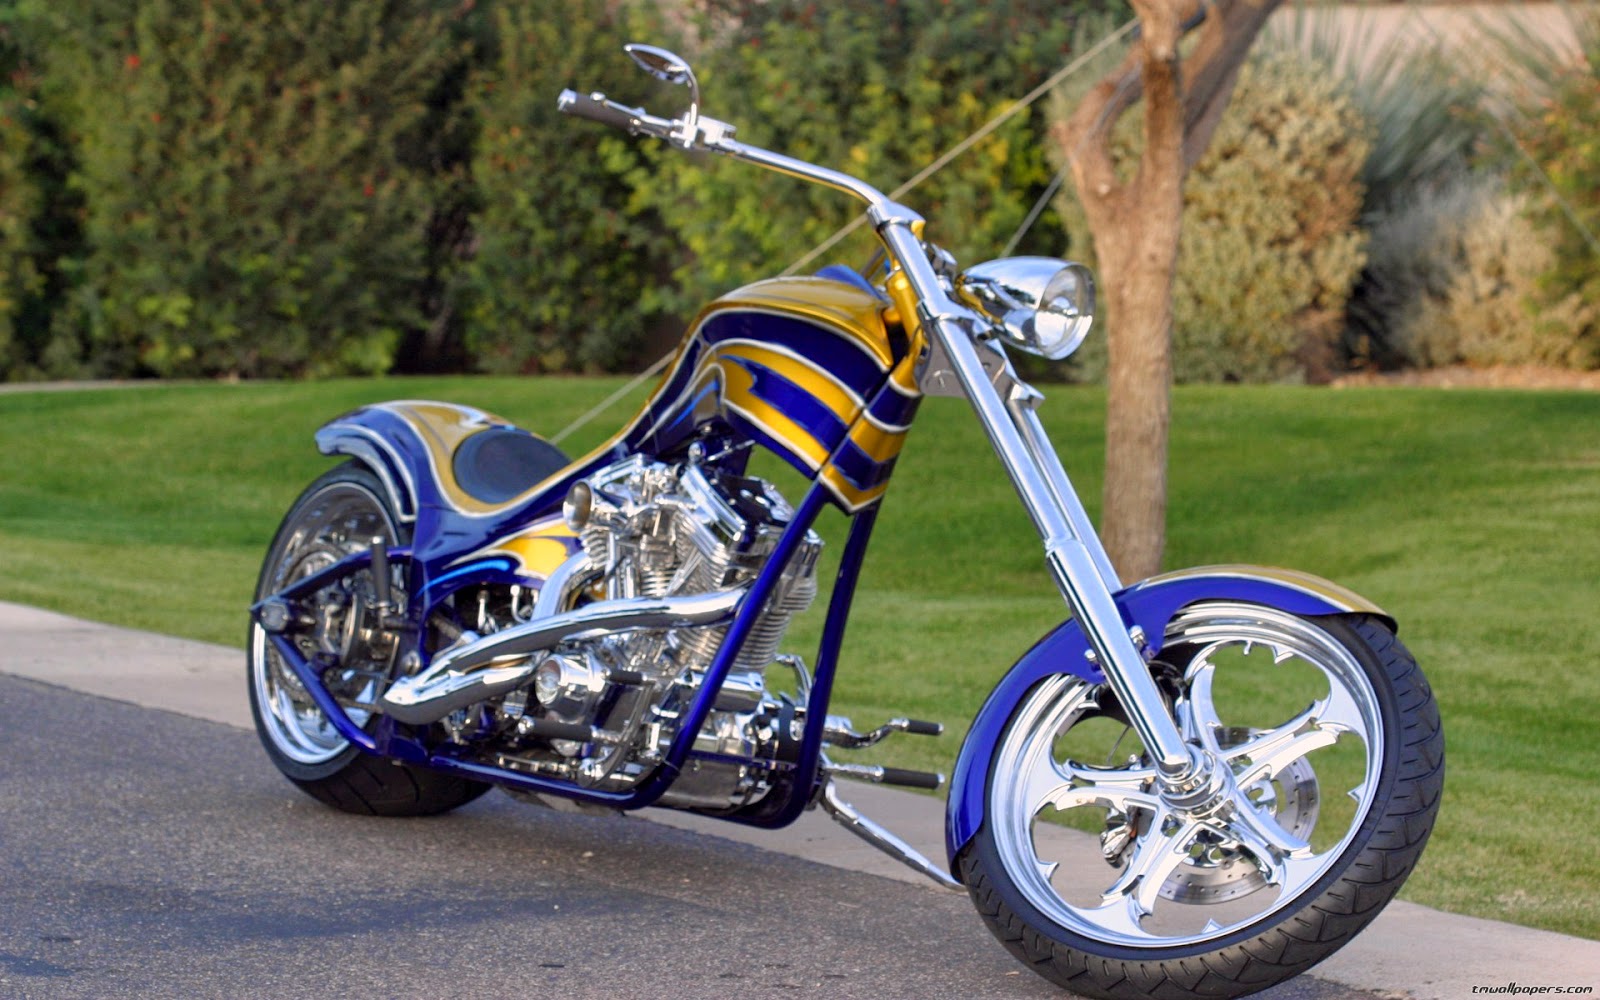  Modifikasi Motor Harley Davidson Bergaya Chopper Ulasan 